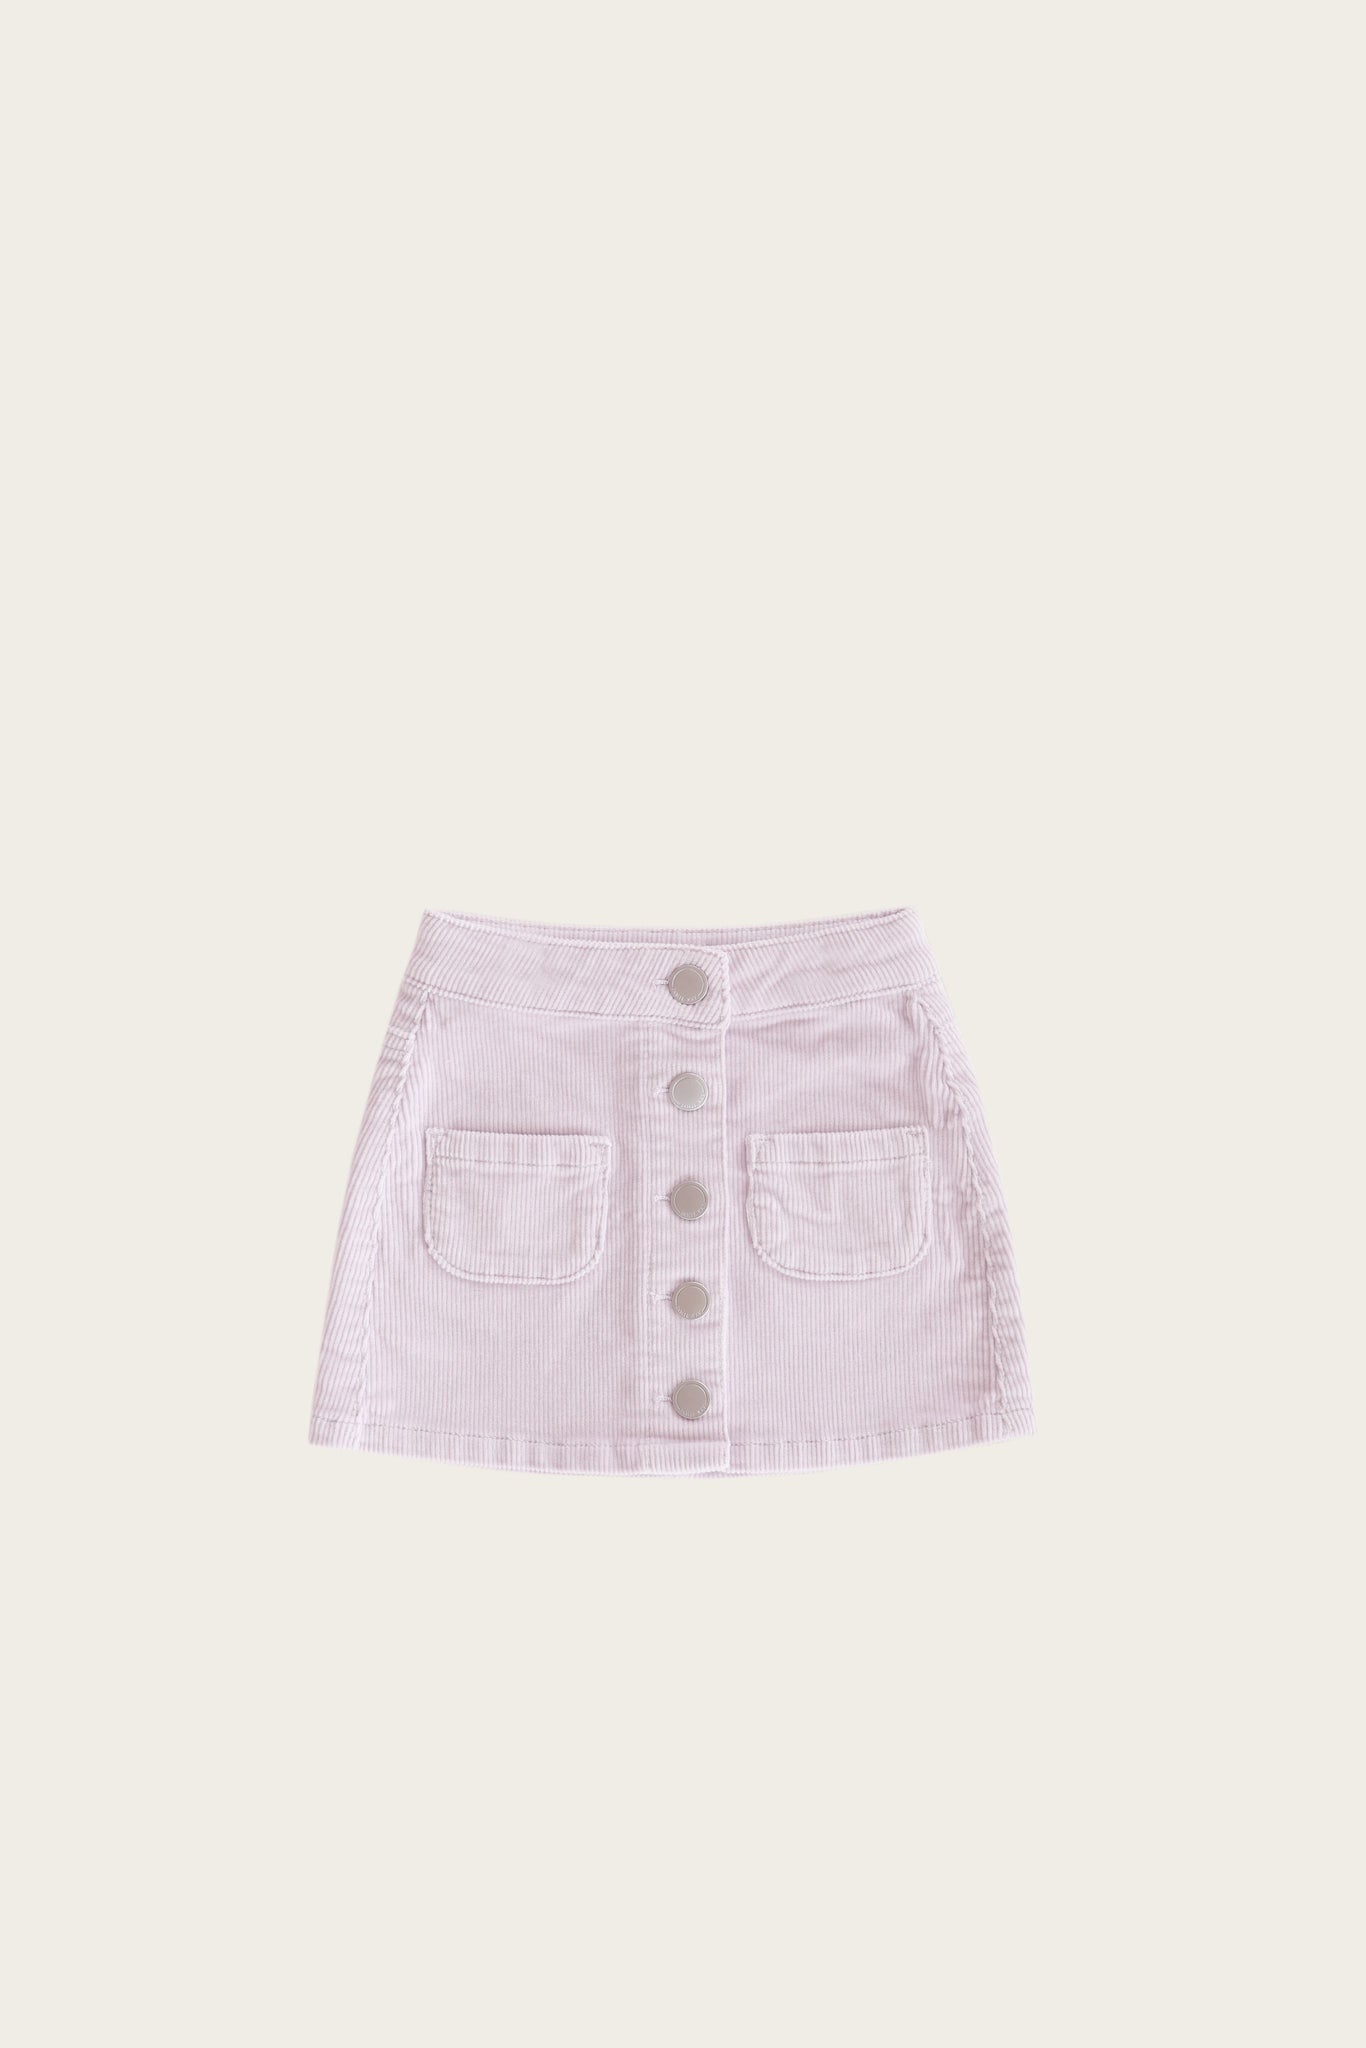 Ava Skirt - Soft Lilac